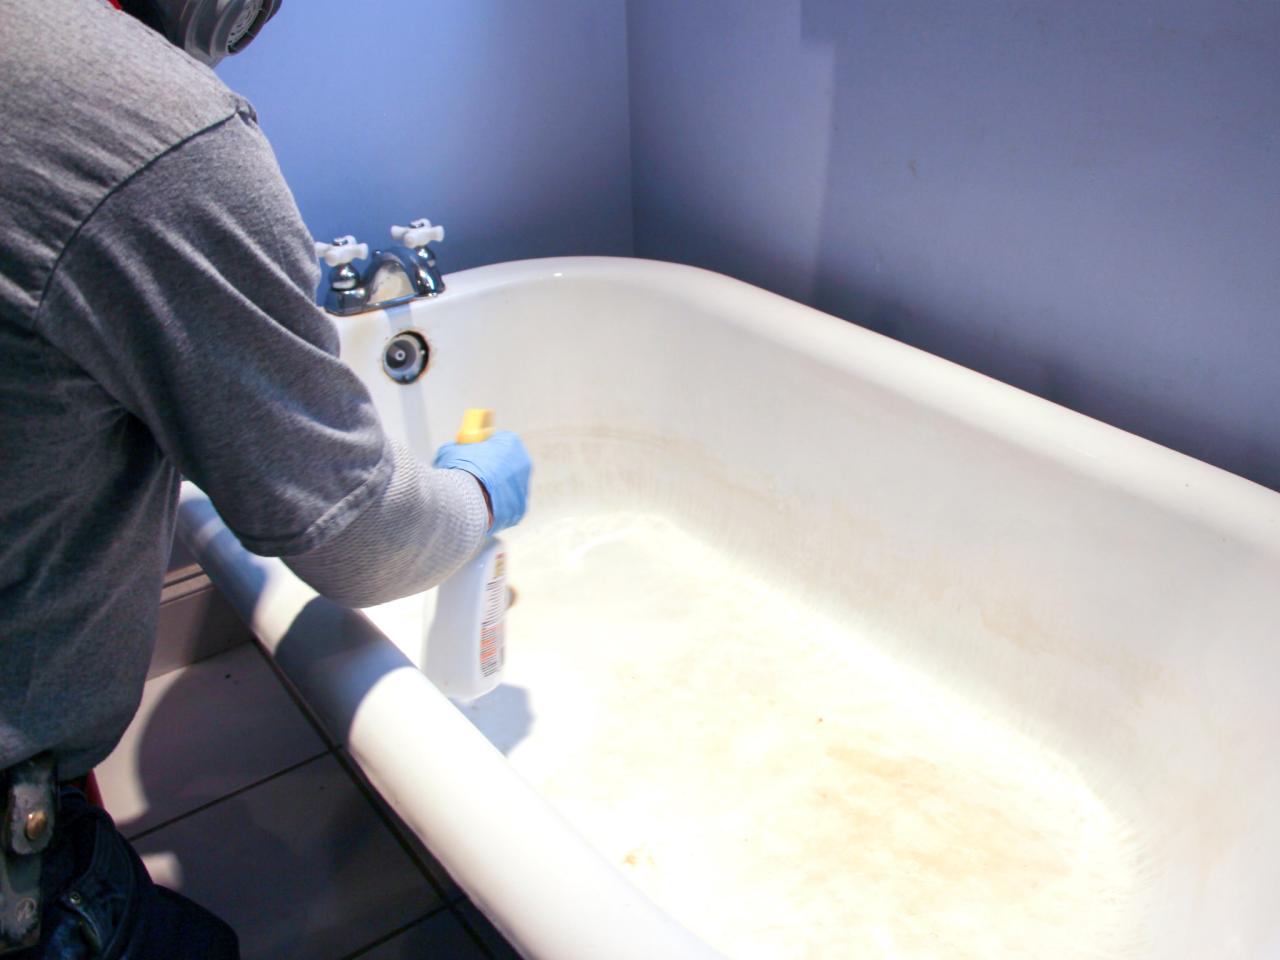 How To Refinish A Bathtub Tos Diy, Can You Resurface A Bathtub Yourself